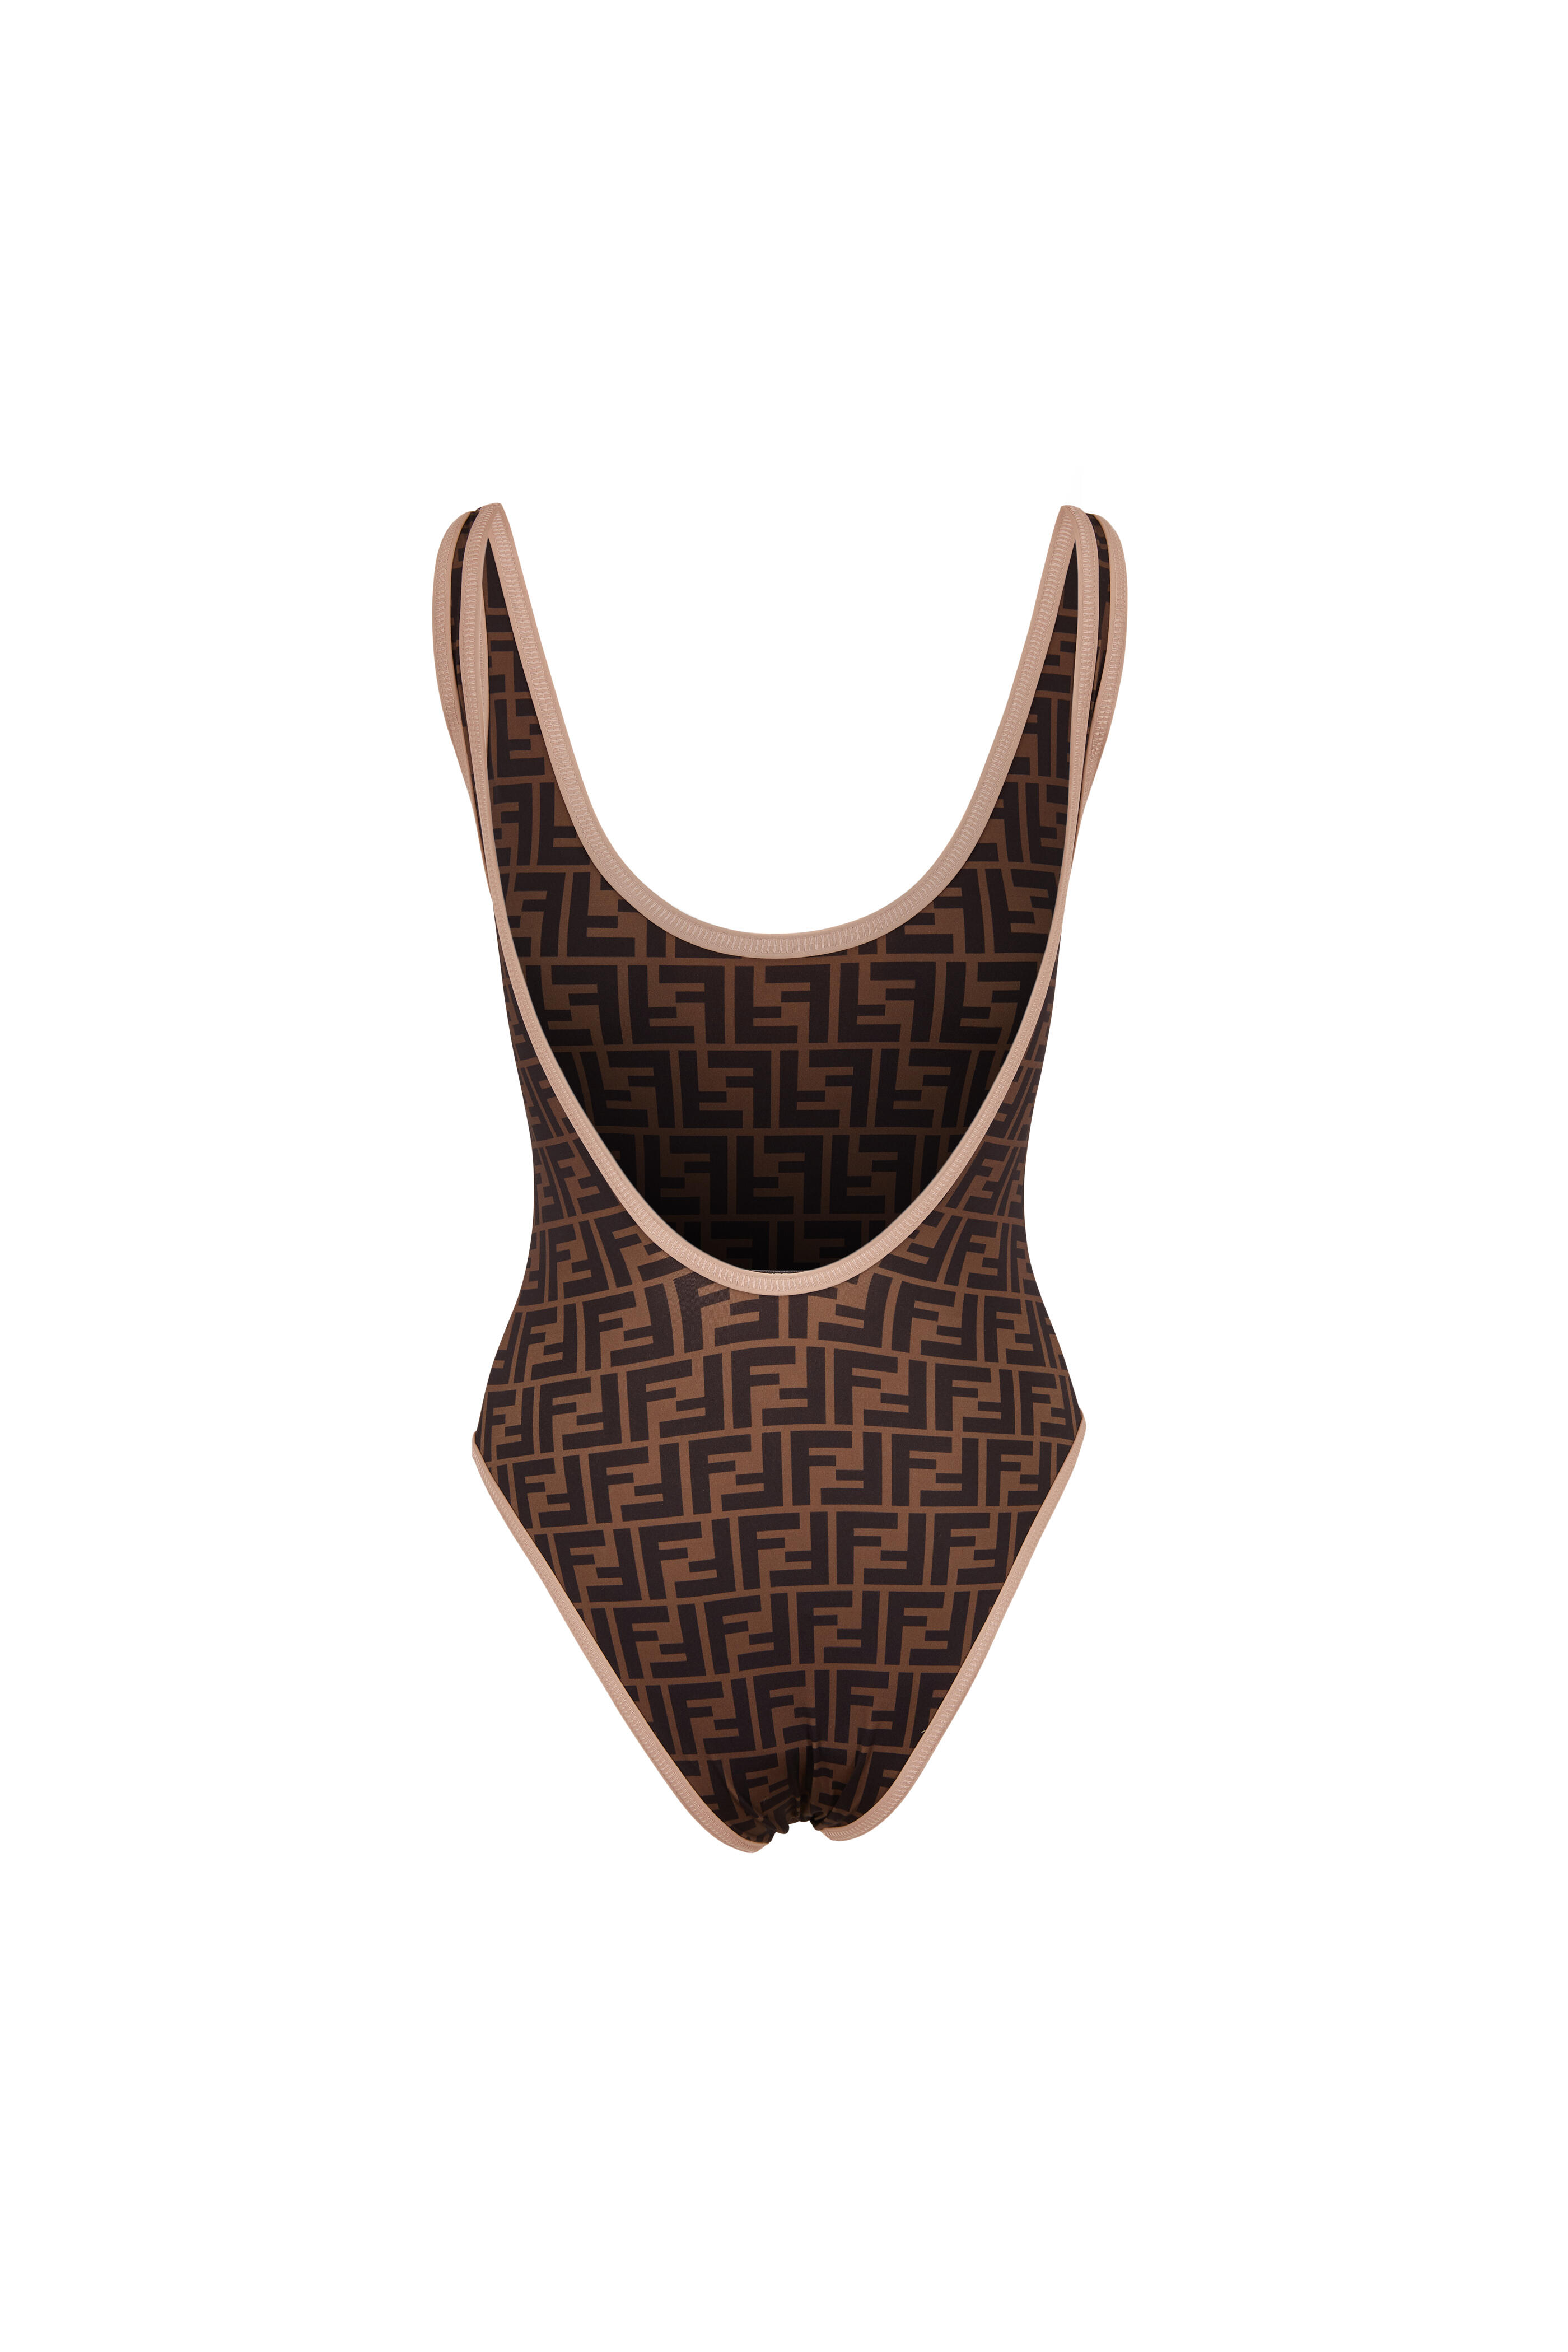 Shop Fendi Fendirama Monogram One-Piece Swimsuit